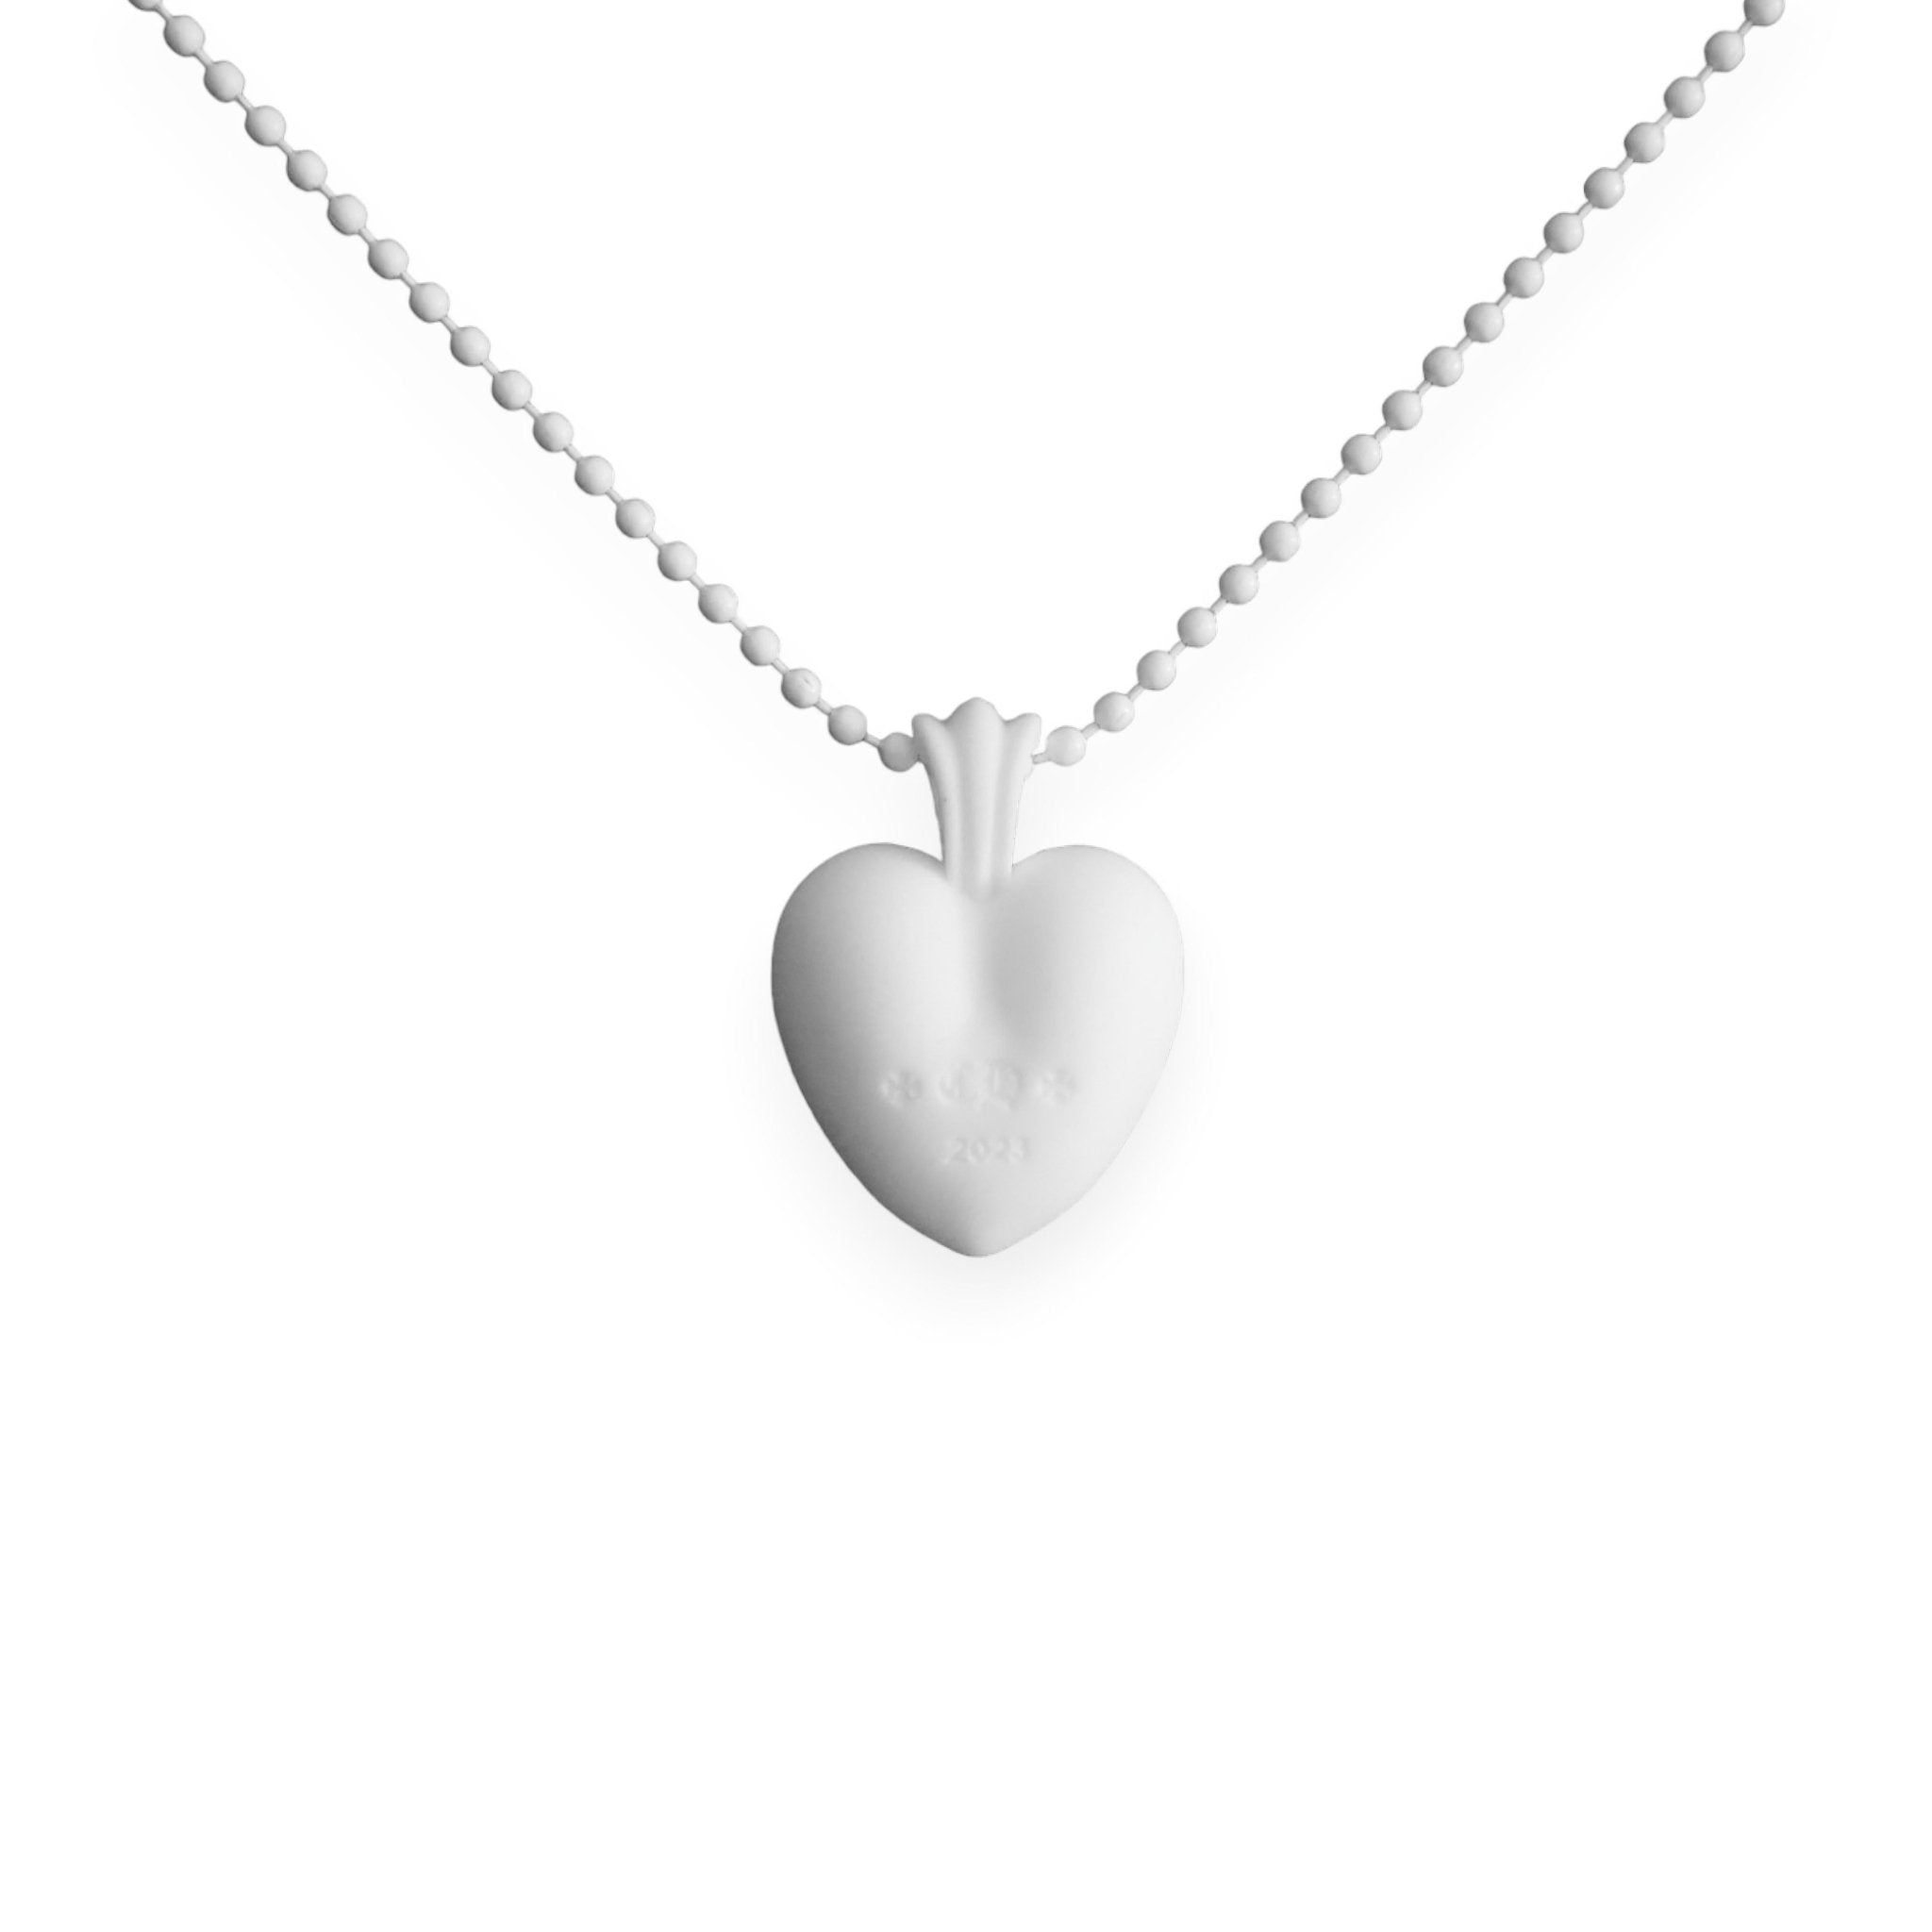 Chrome Hearts Silicone Heart Pendant Necklace - Chrome Hearts